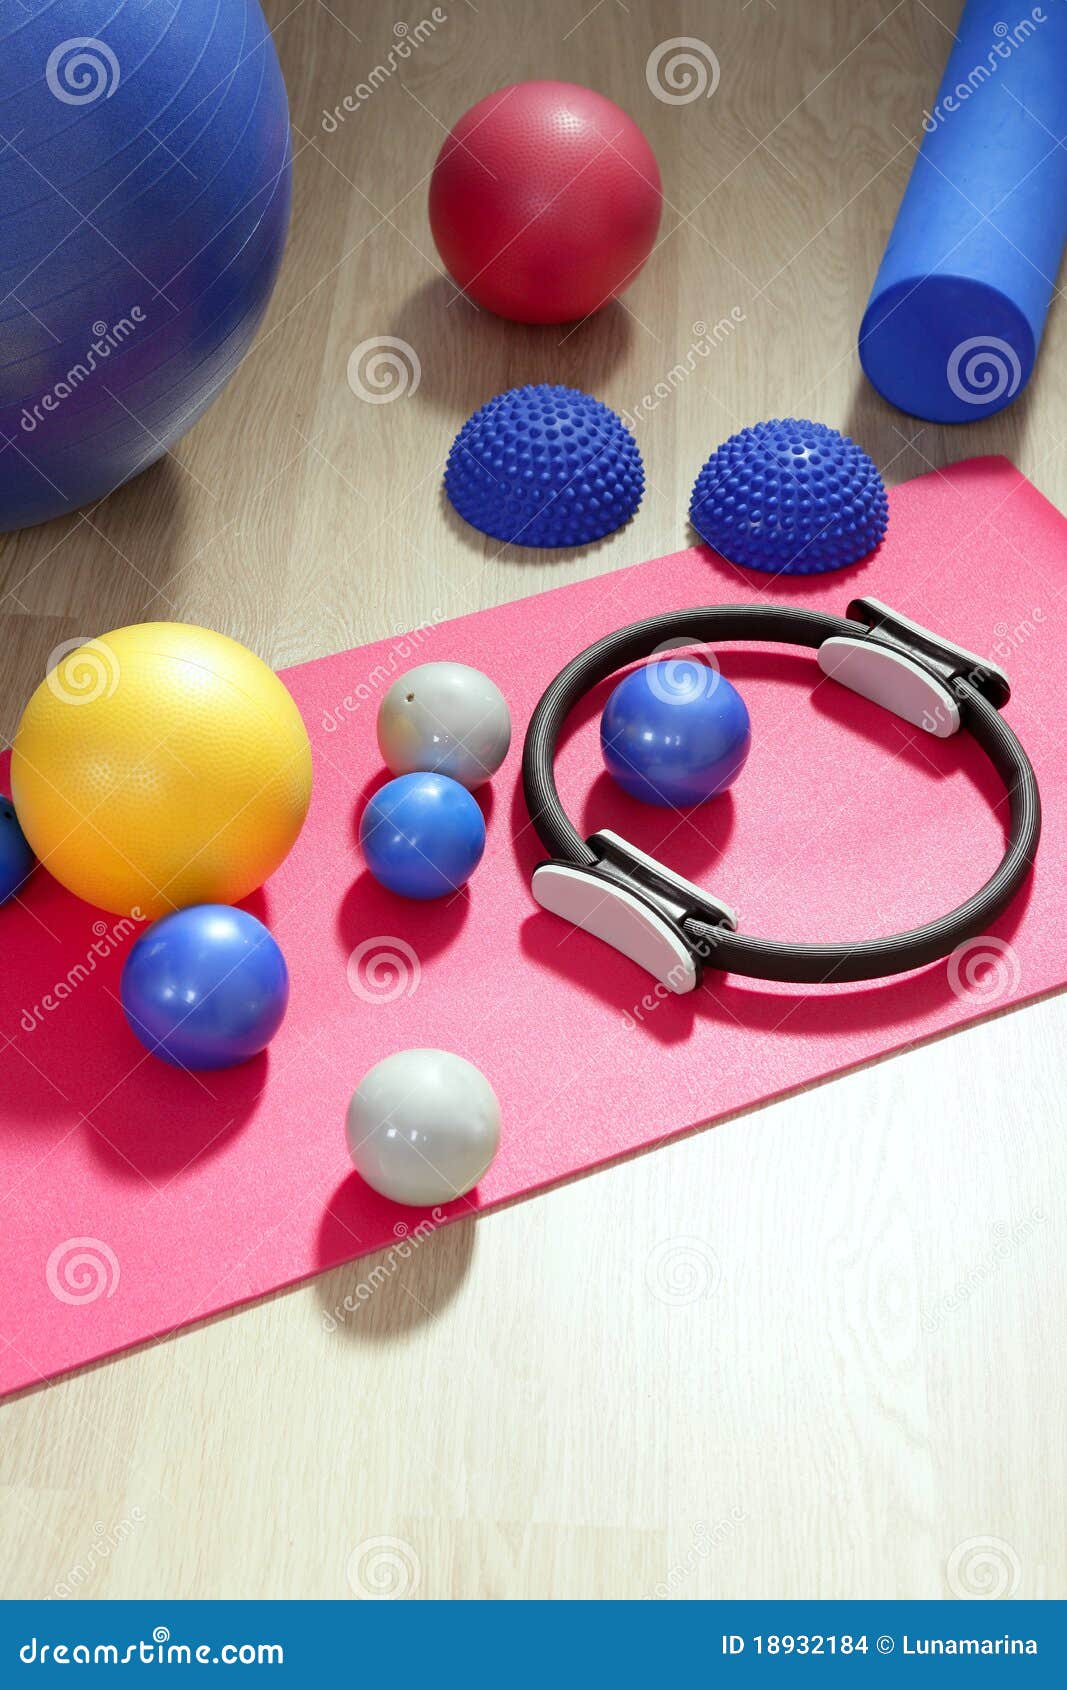 balls pilates toning stability ring roller